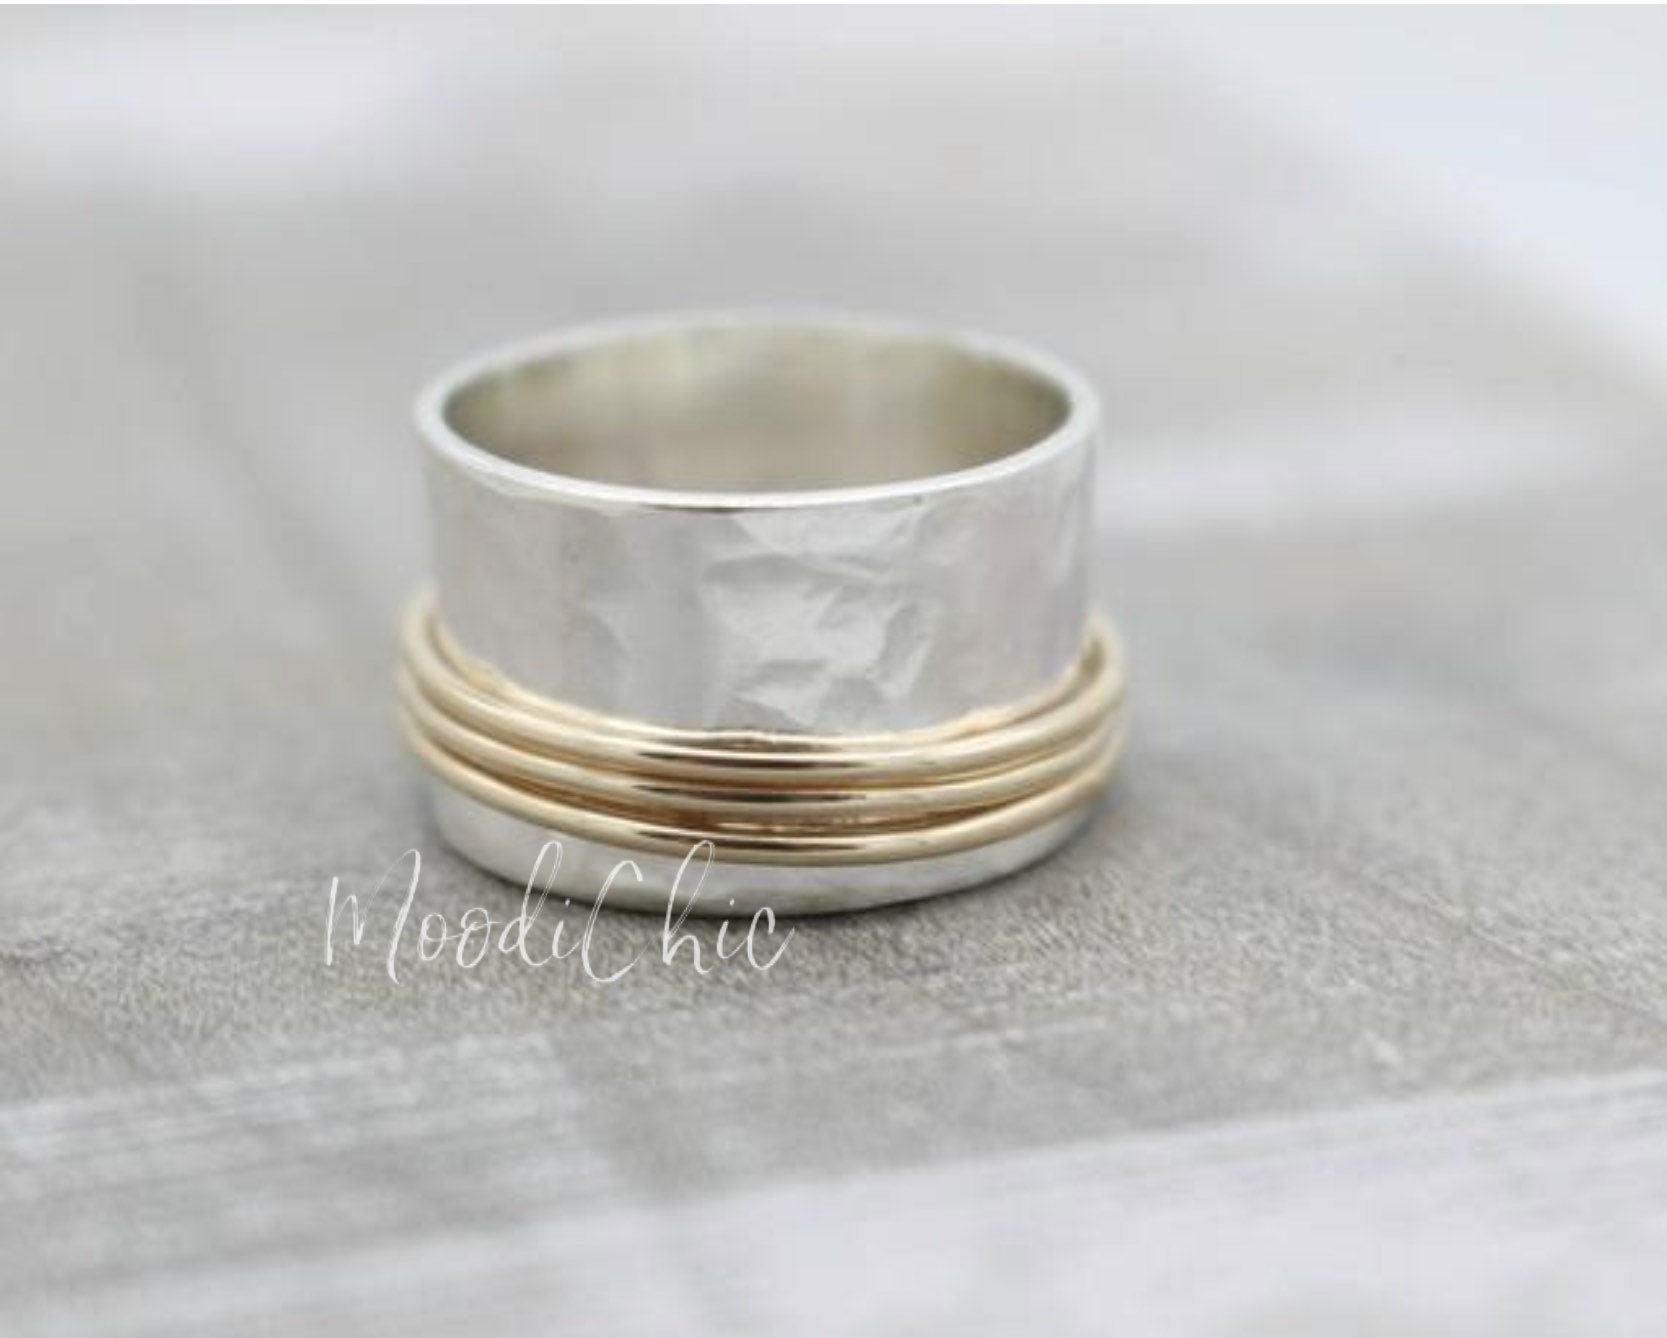 Gold filled sterling silver spinner ring